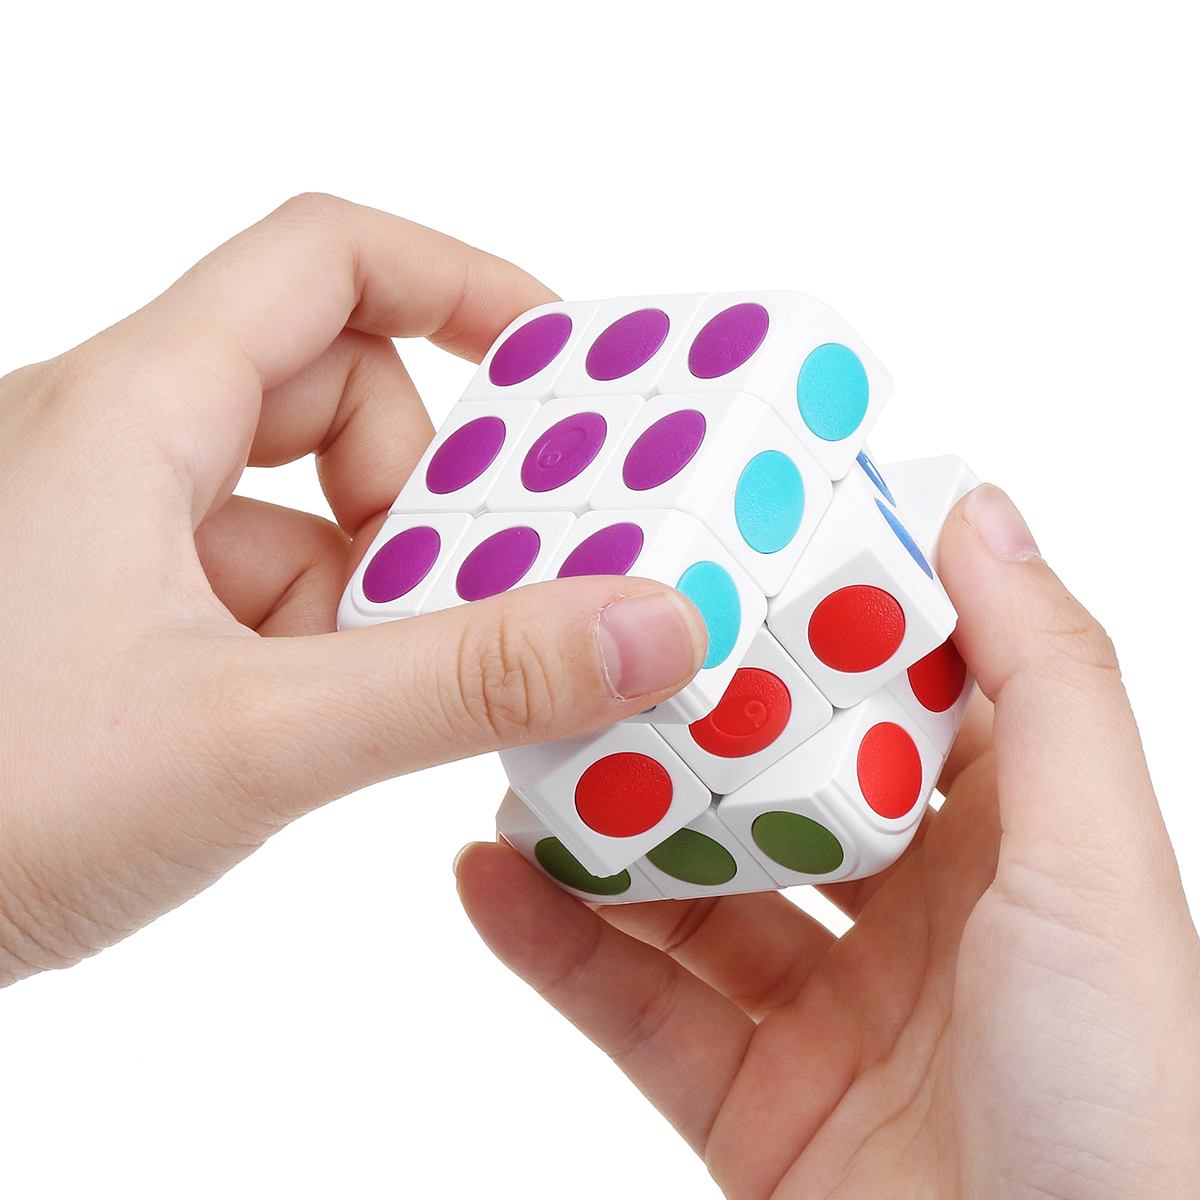 

Magic Puzzle Cubes Super Square 3x3 Magic Cube Smart App Science Education Toy Anti Stress Adults Kids Puzzle Toy